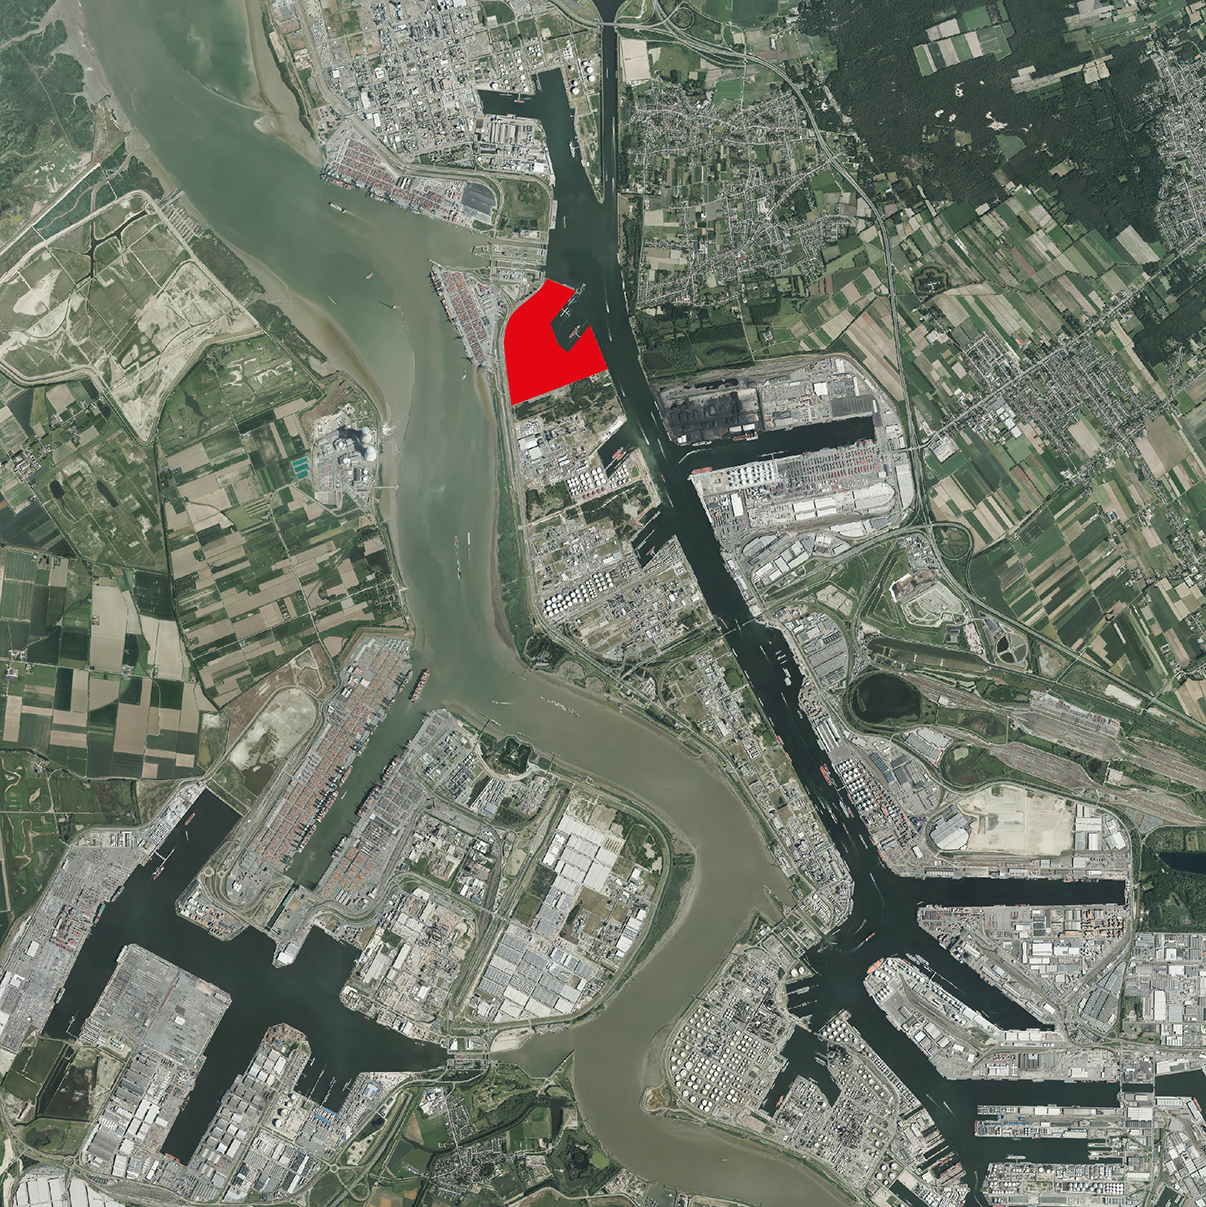 Vopak and Port of Antwerp-Bruges to sustainably redevelop former Gunvor site